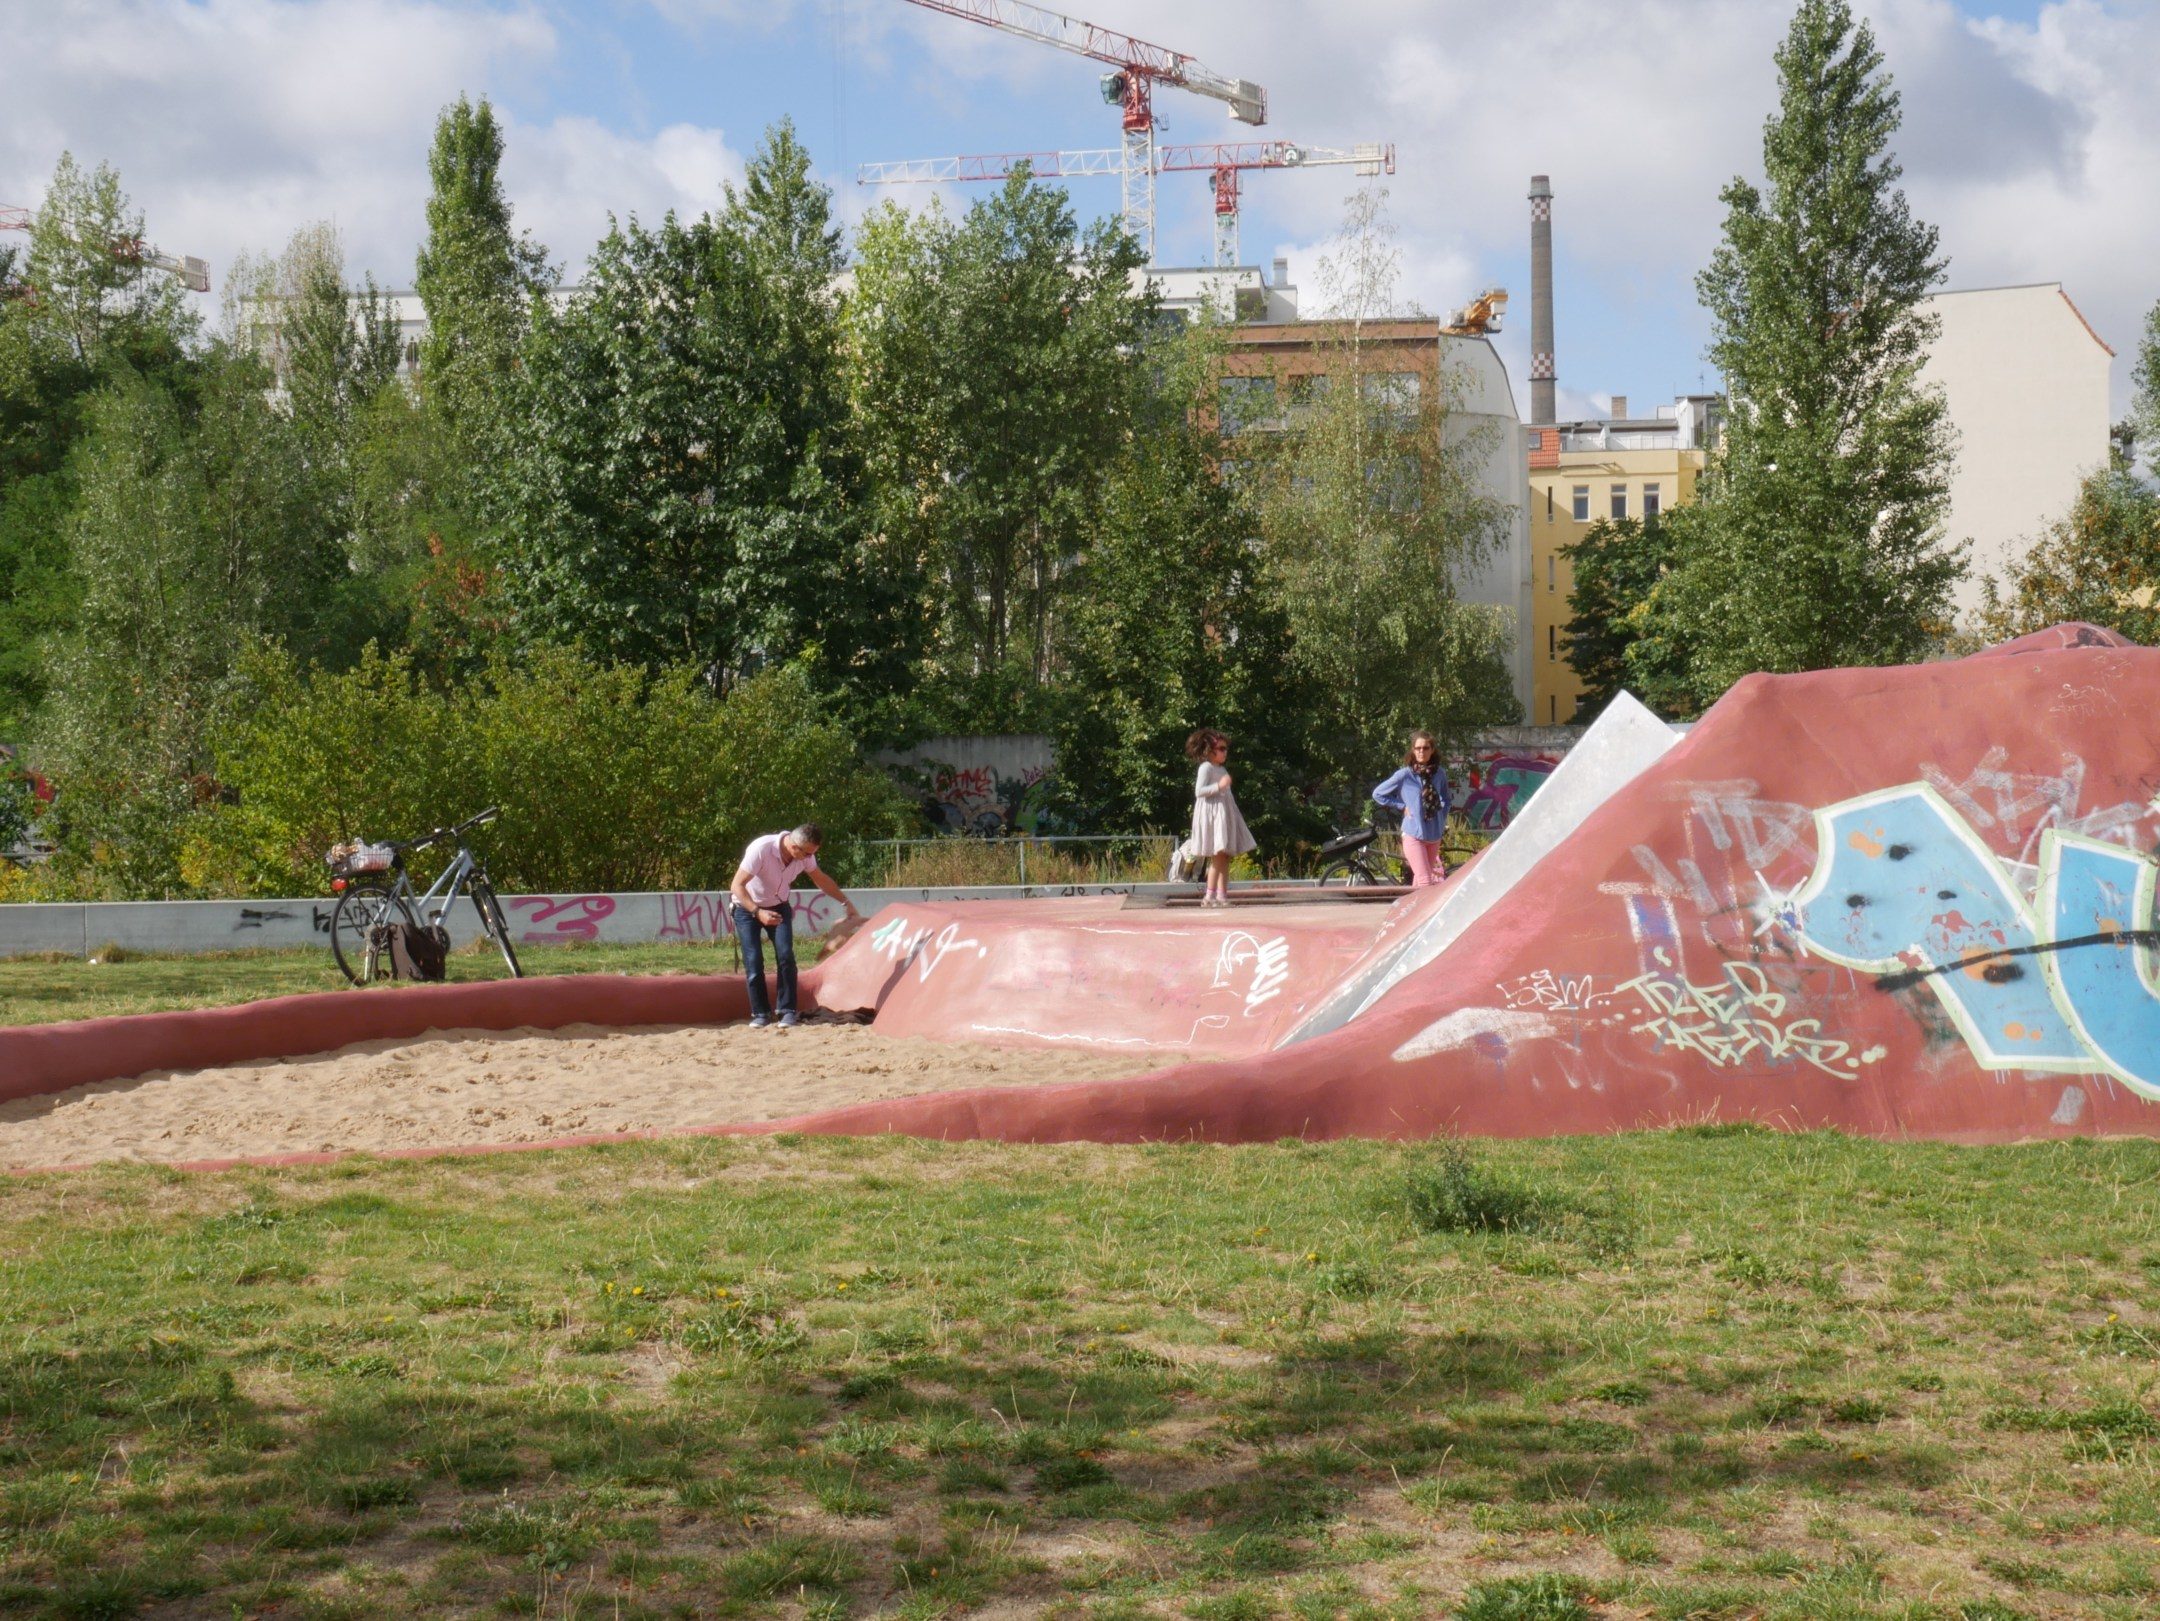 Image of skatepark in abandoned urban setting